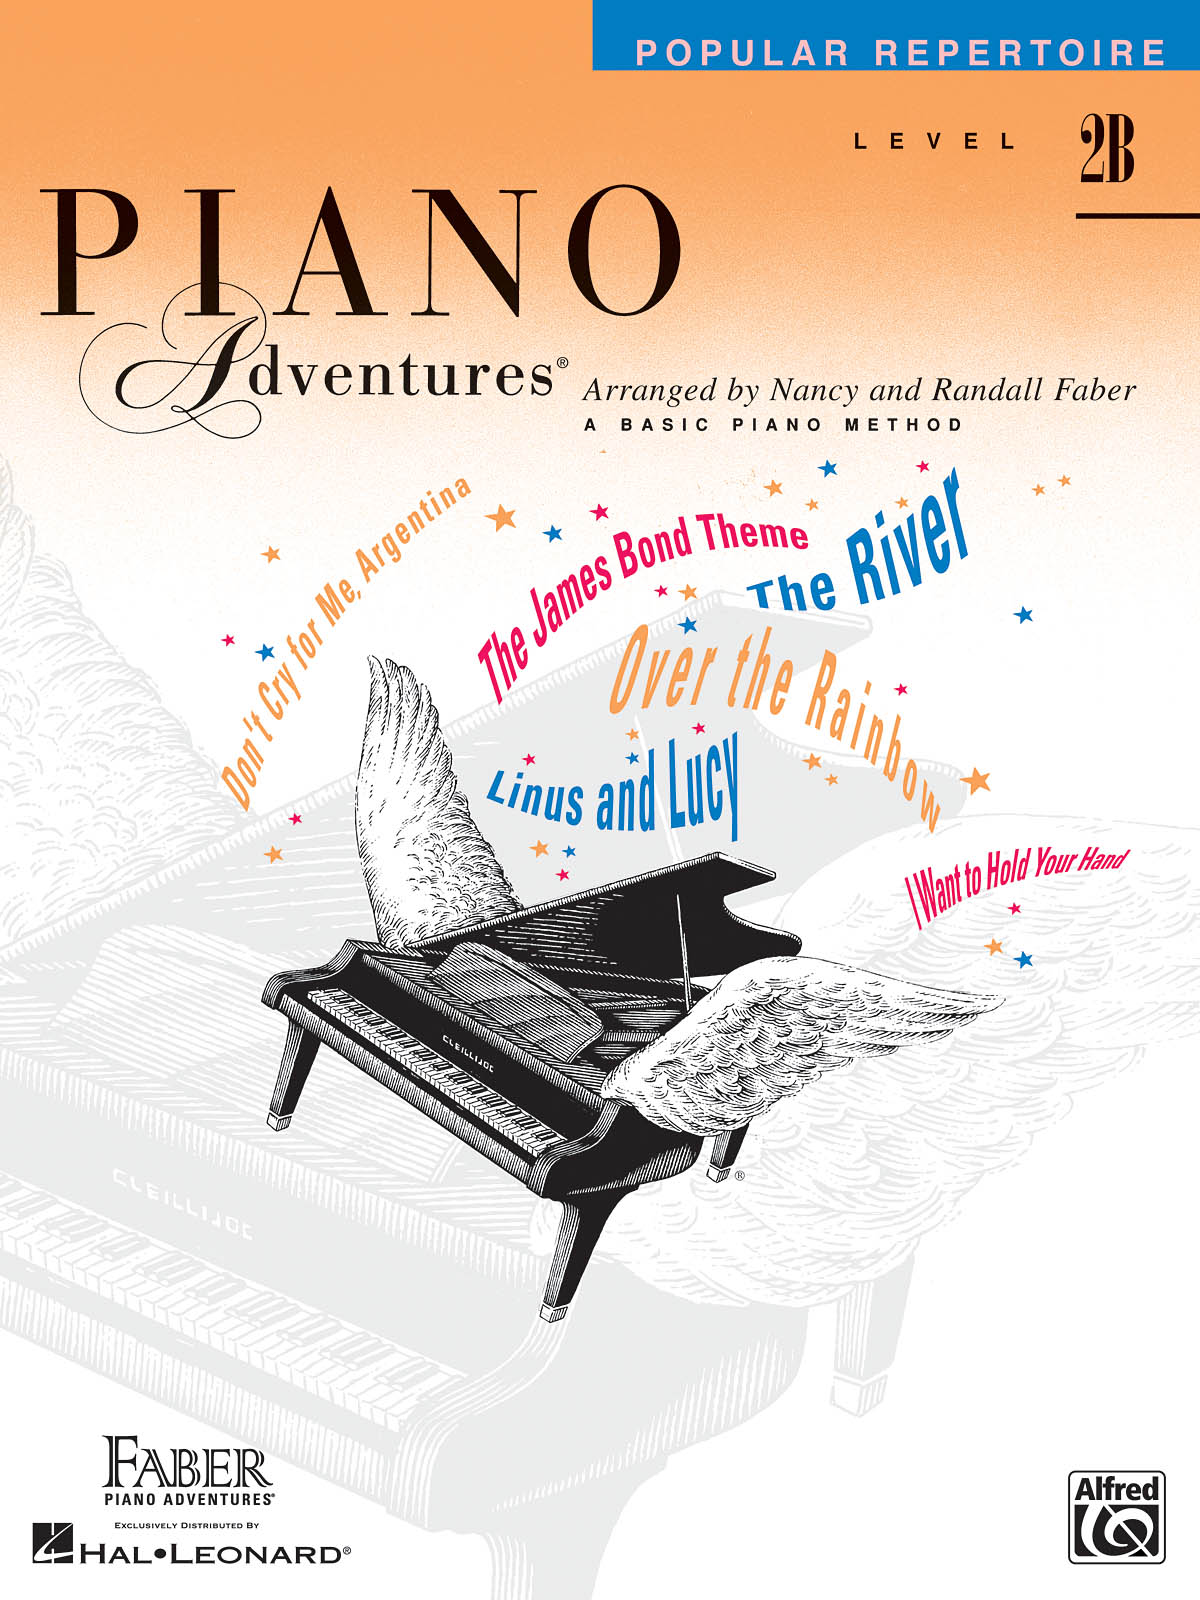 Piano Adventures Level 2B - Popular Repertoire učebnice pro klavír